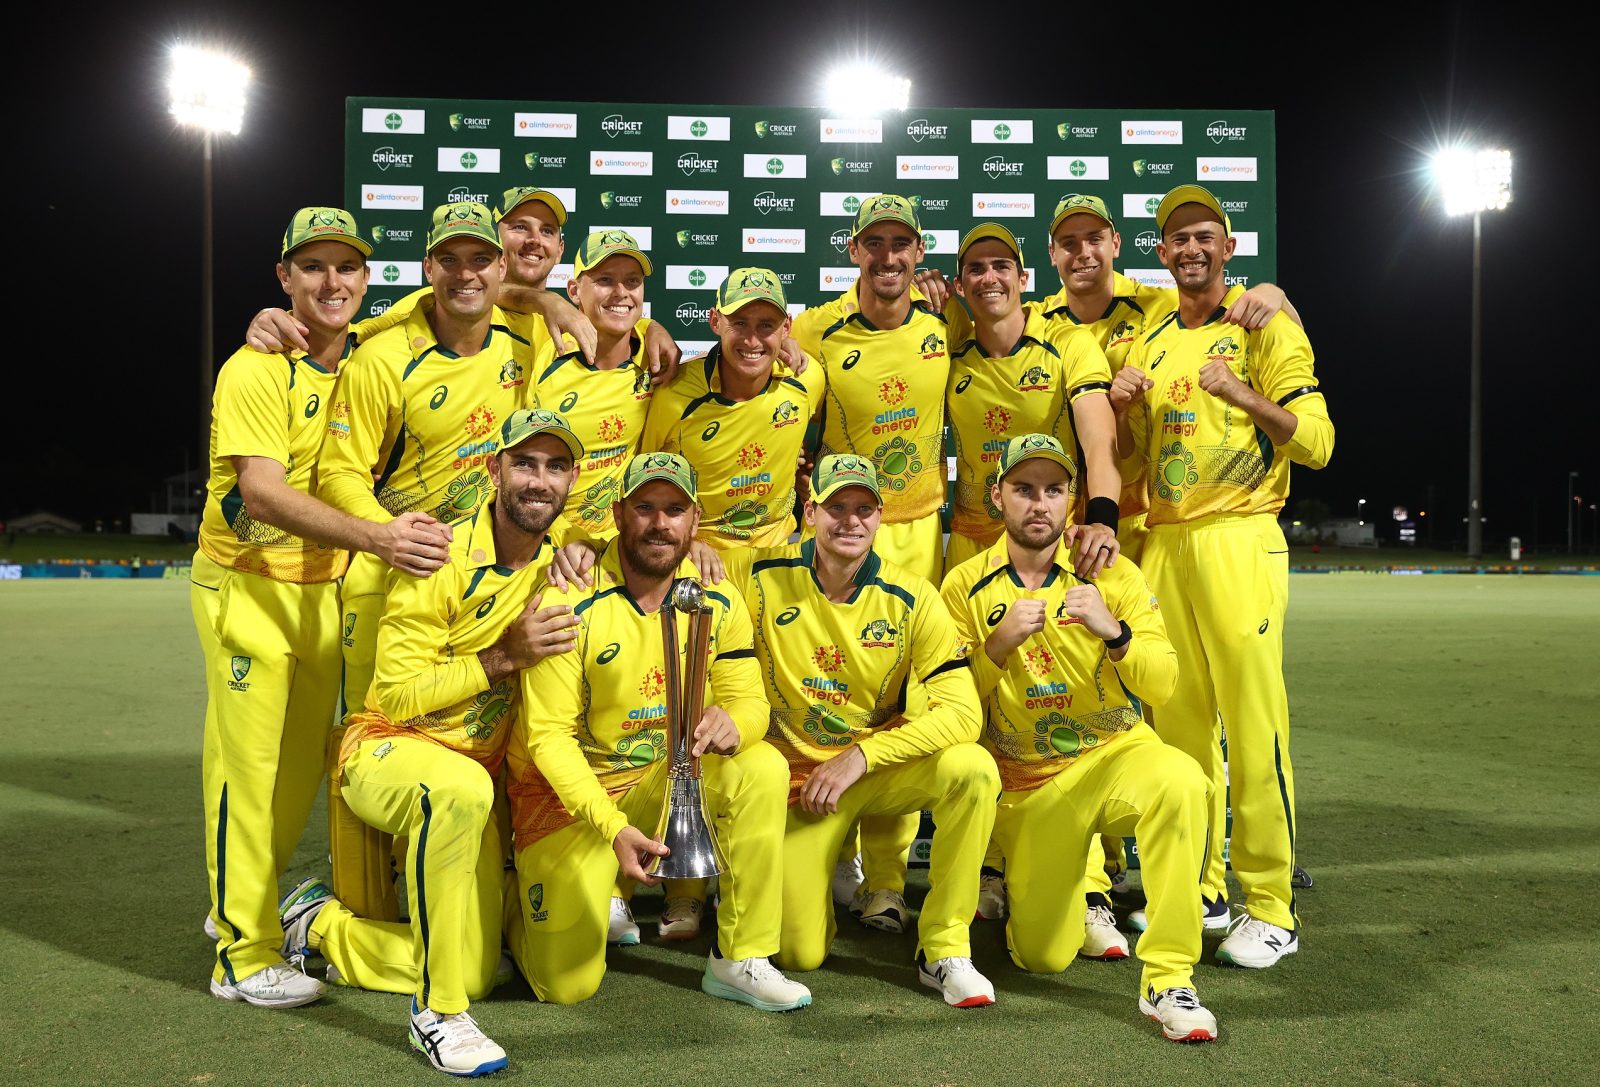 Australia won the series against New Zealand